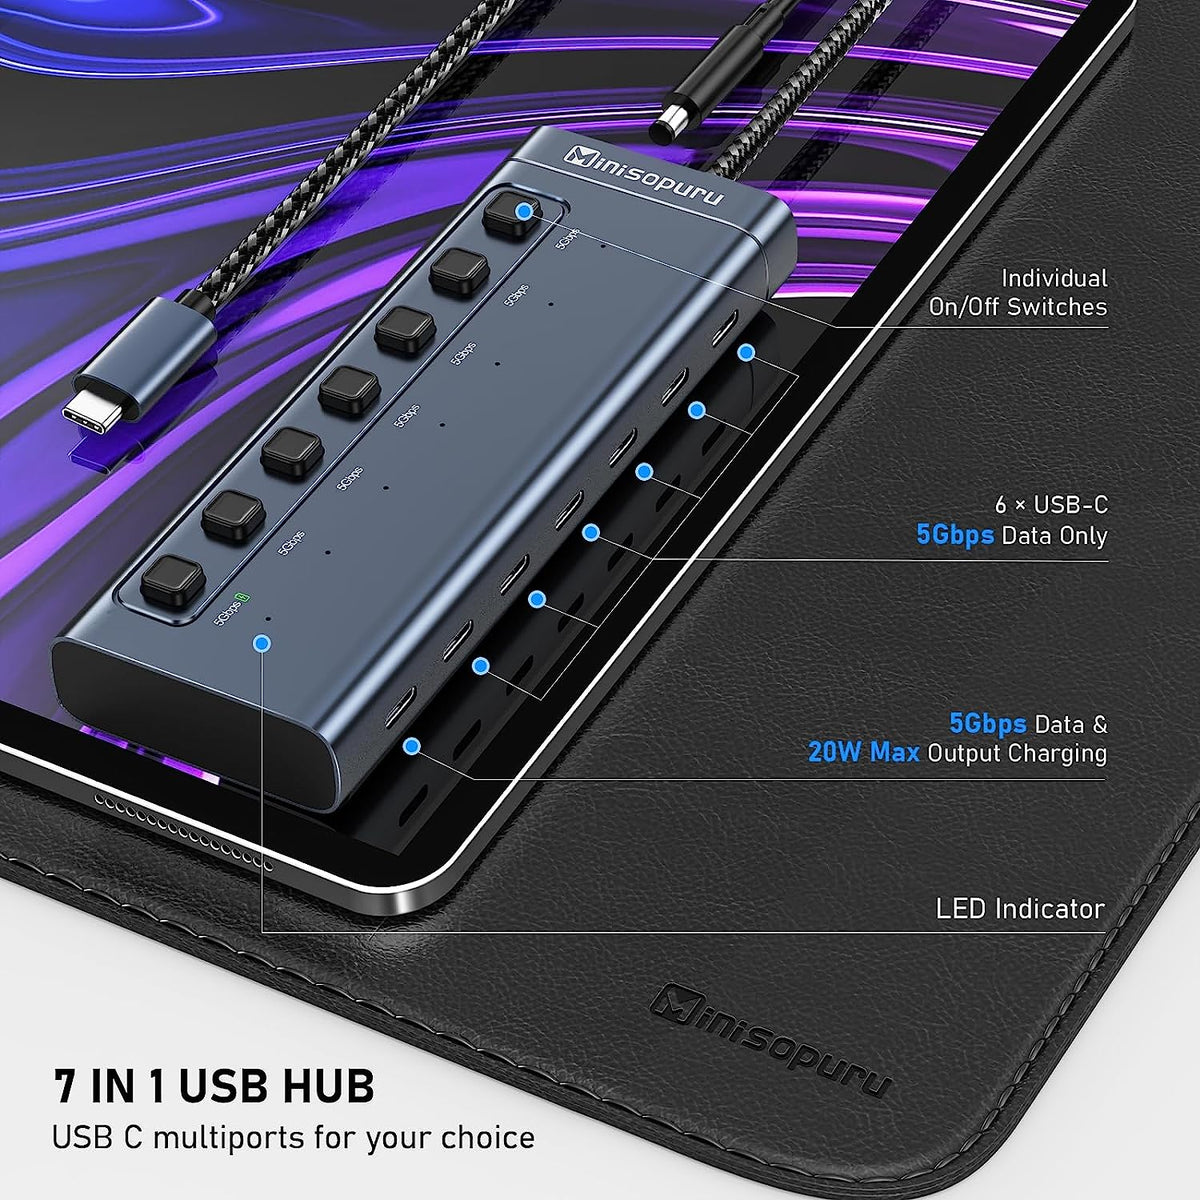 Minisopuru Powered USB C Hub 7 in 1 USB C Splitter Support Fast Data & Fast Charging |MH807C